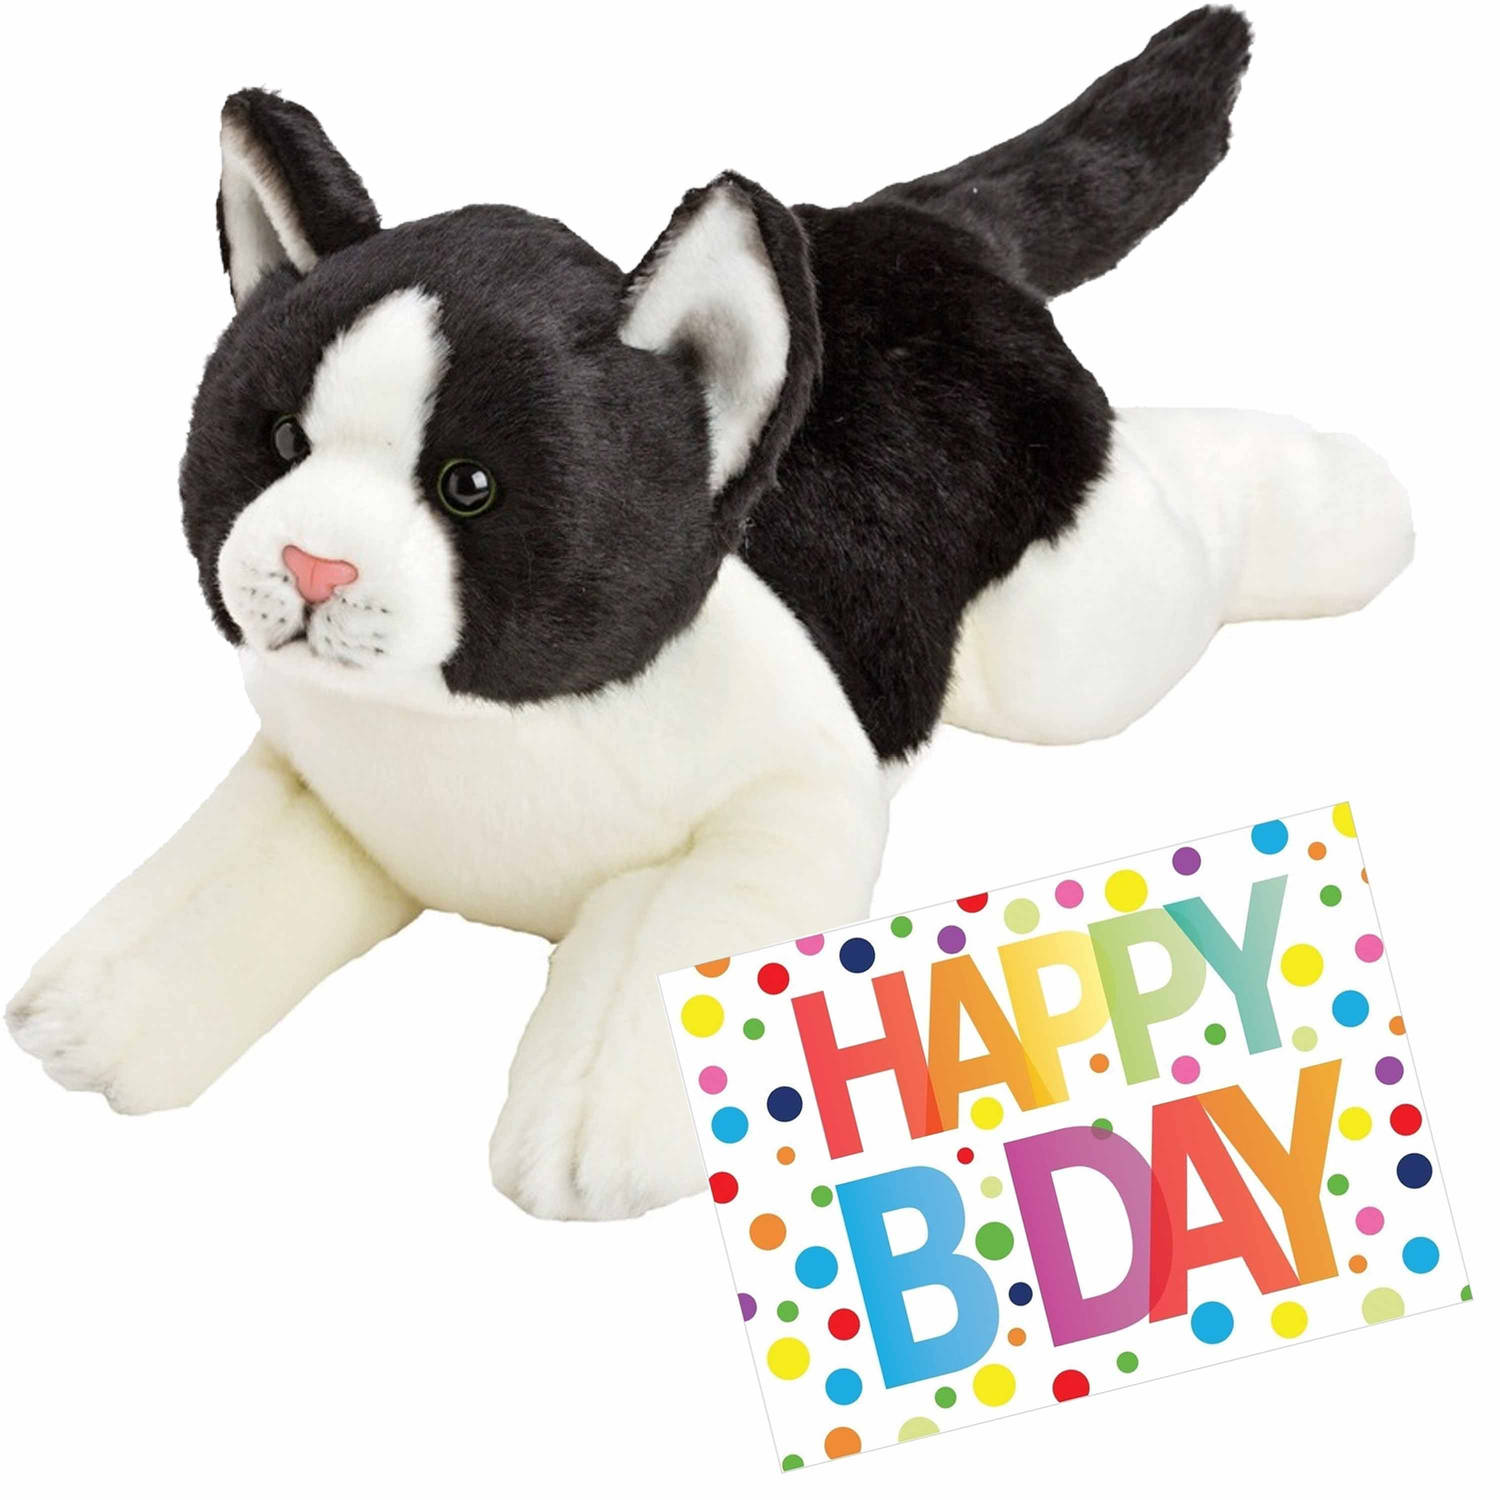 Pluche knuffel zwart-witte kat-poes 33 met A5-size Happy Birthday wenskaart Knuffel huisdieren